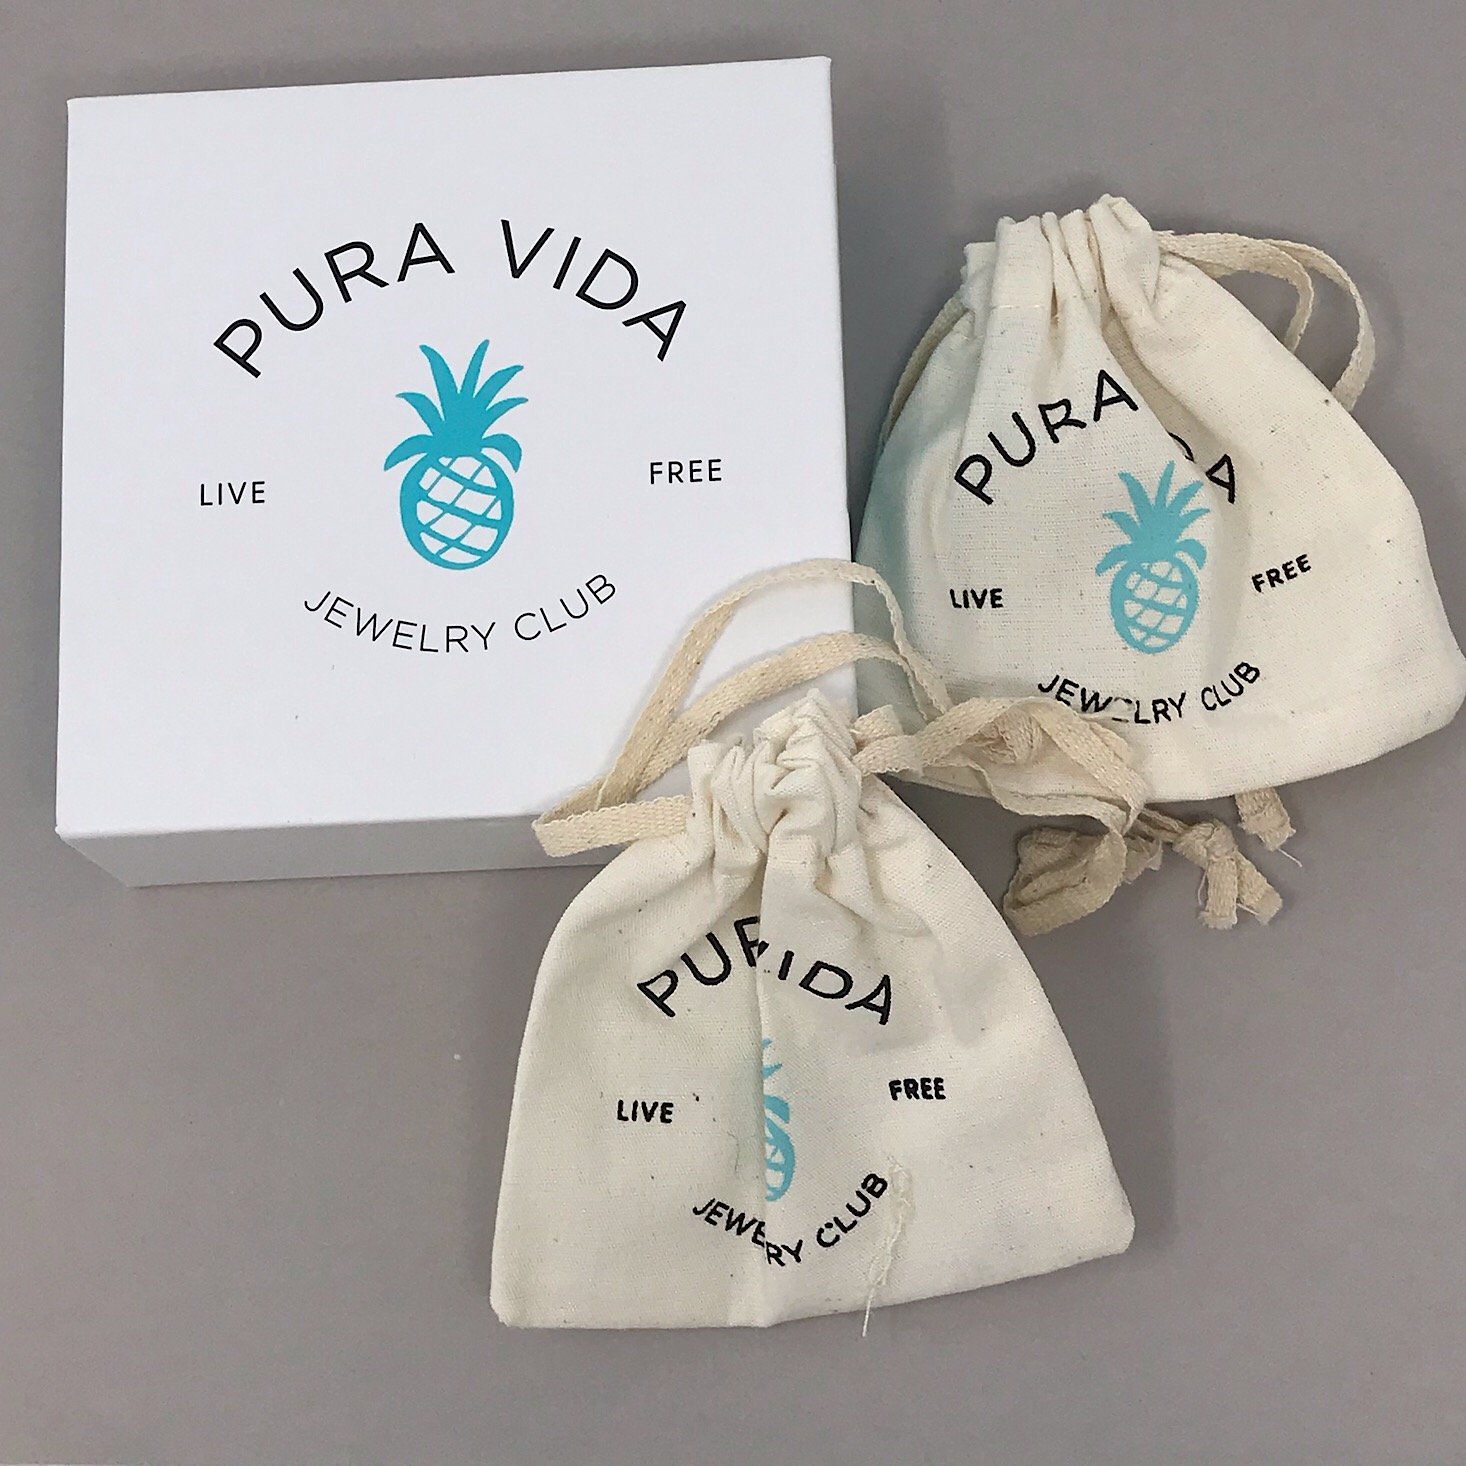 Pura Vida Jewelry Club Subscription Review – June 2019